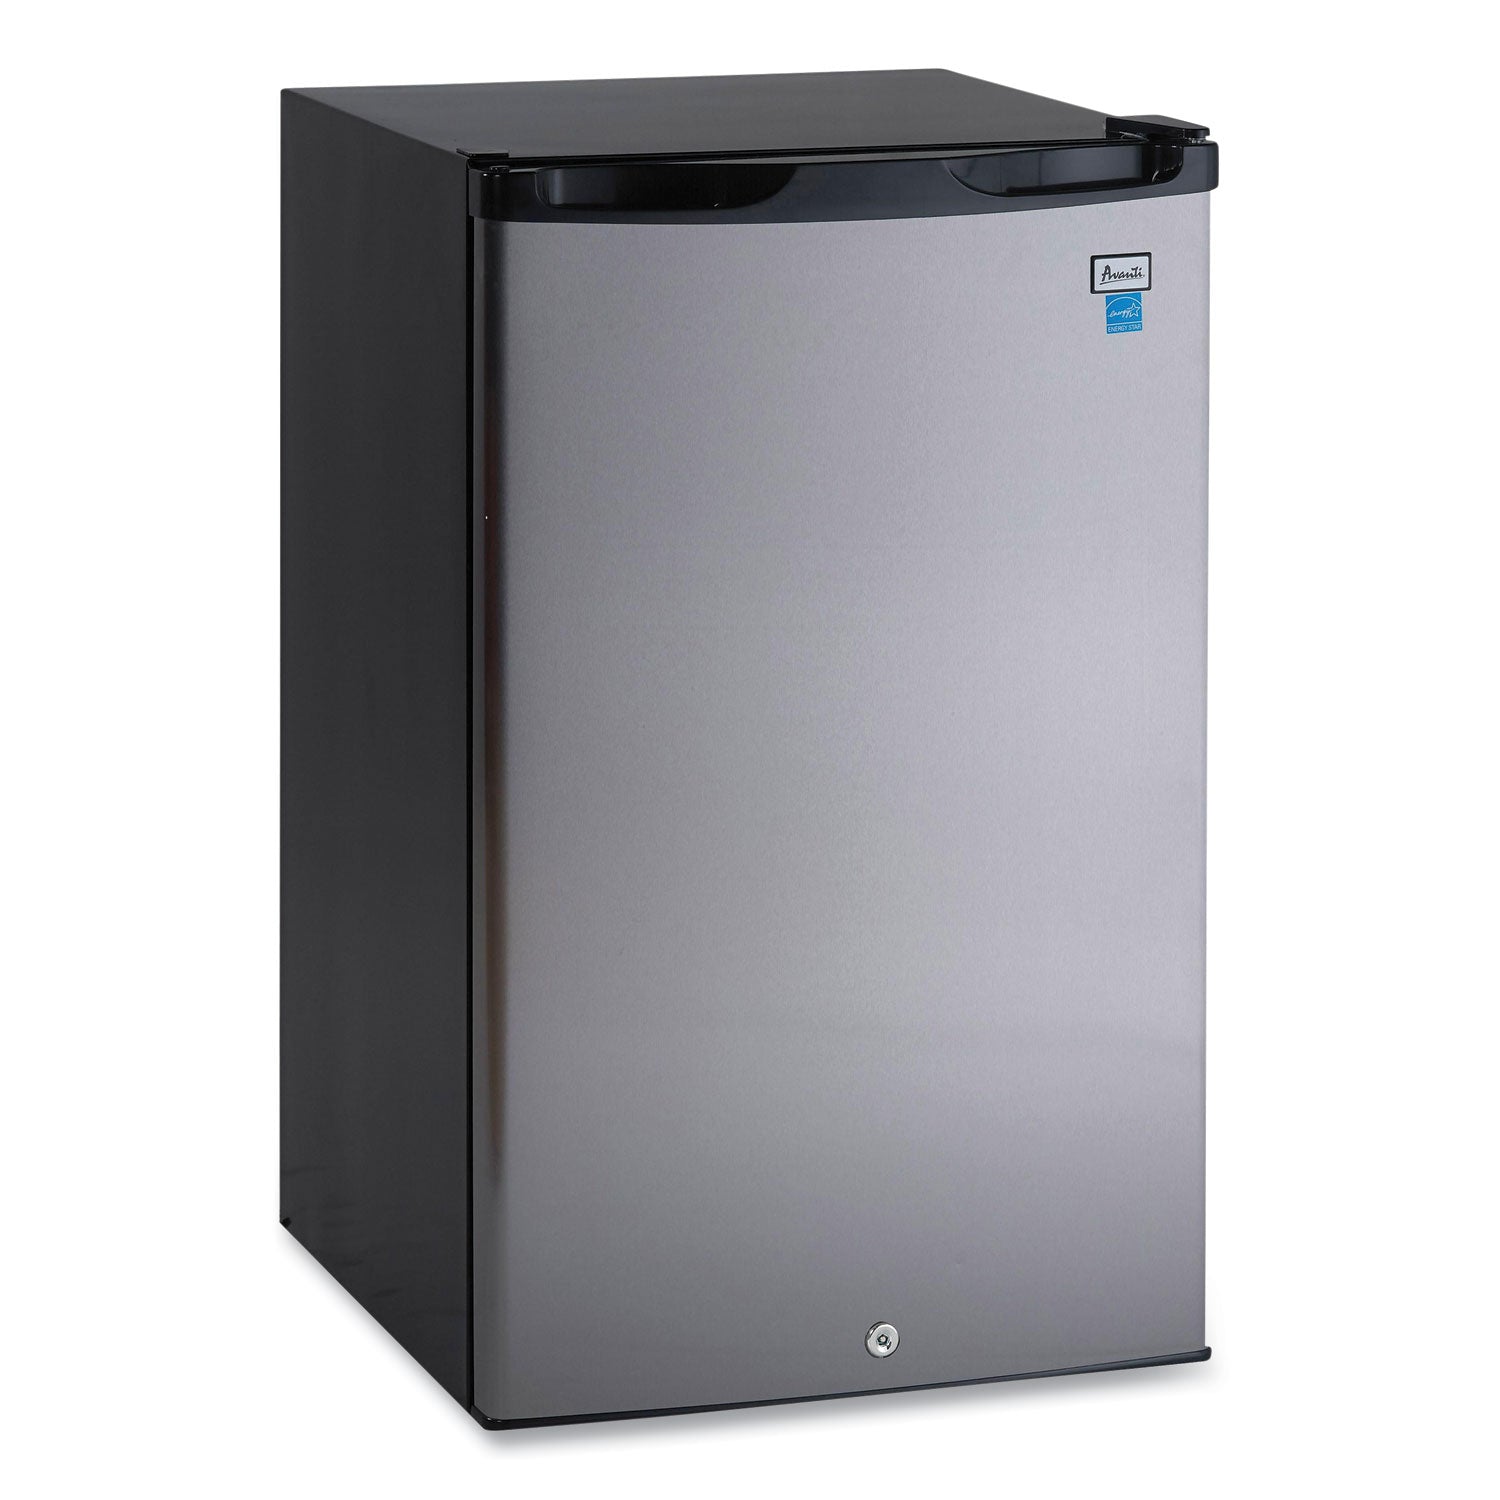 44-cuft-auto-defrost-refrigerator-1925-x-22-x-33-black-with-stainless-steel-door_avaar4456ss - 1